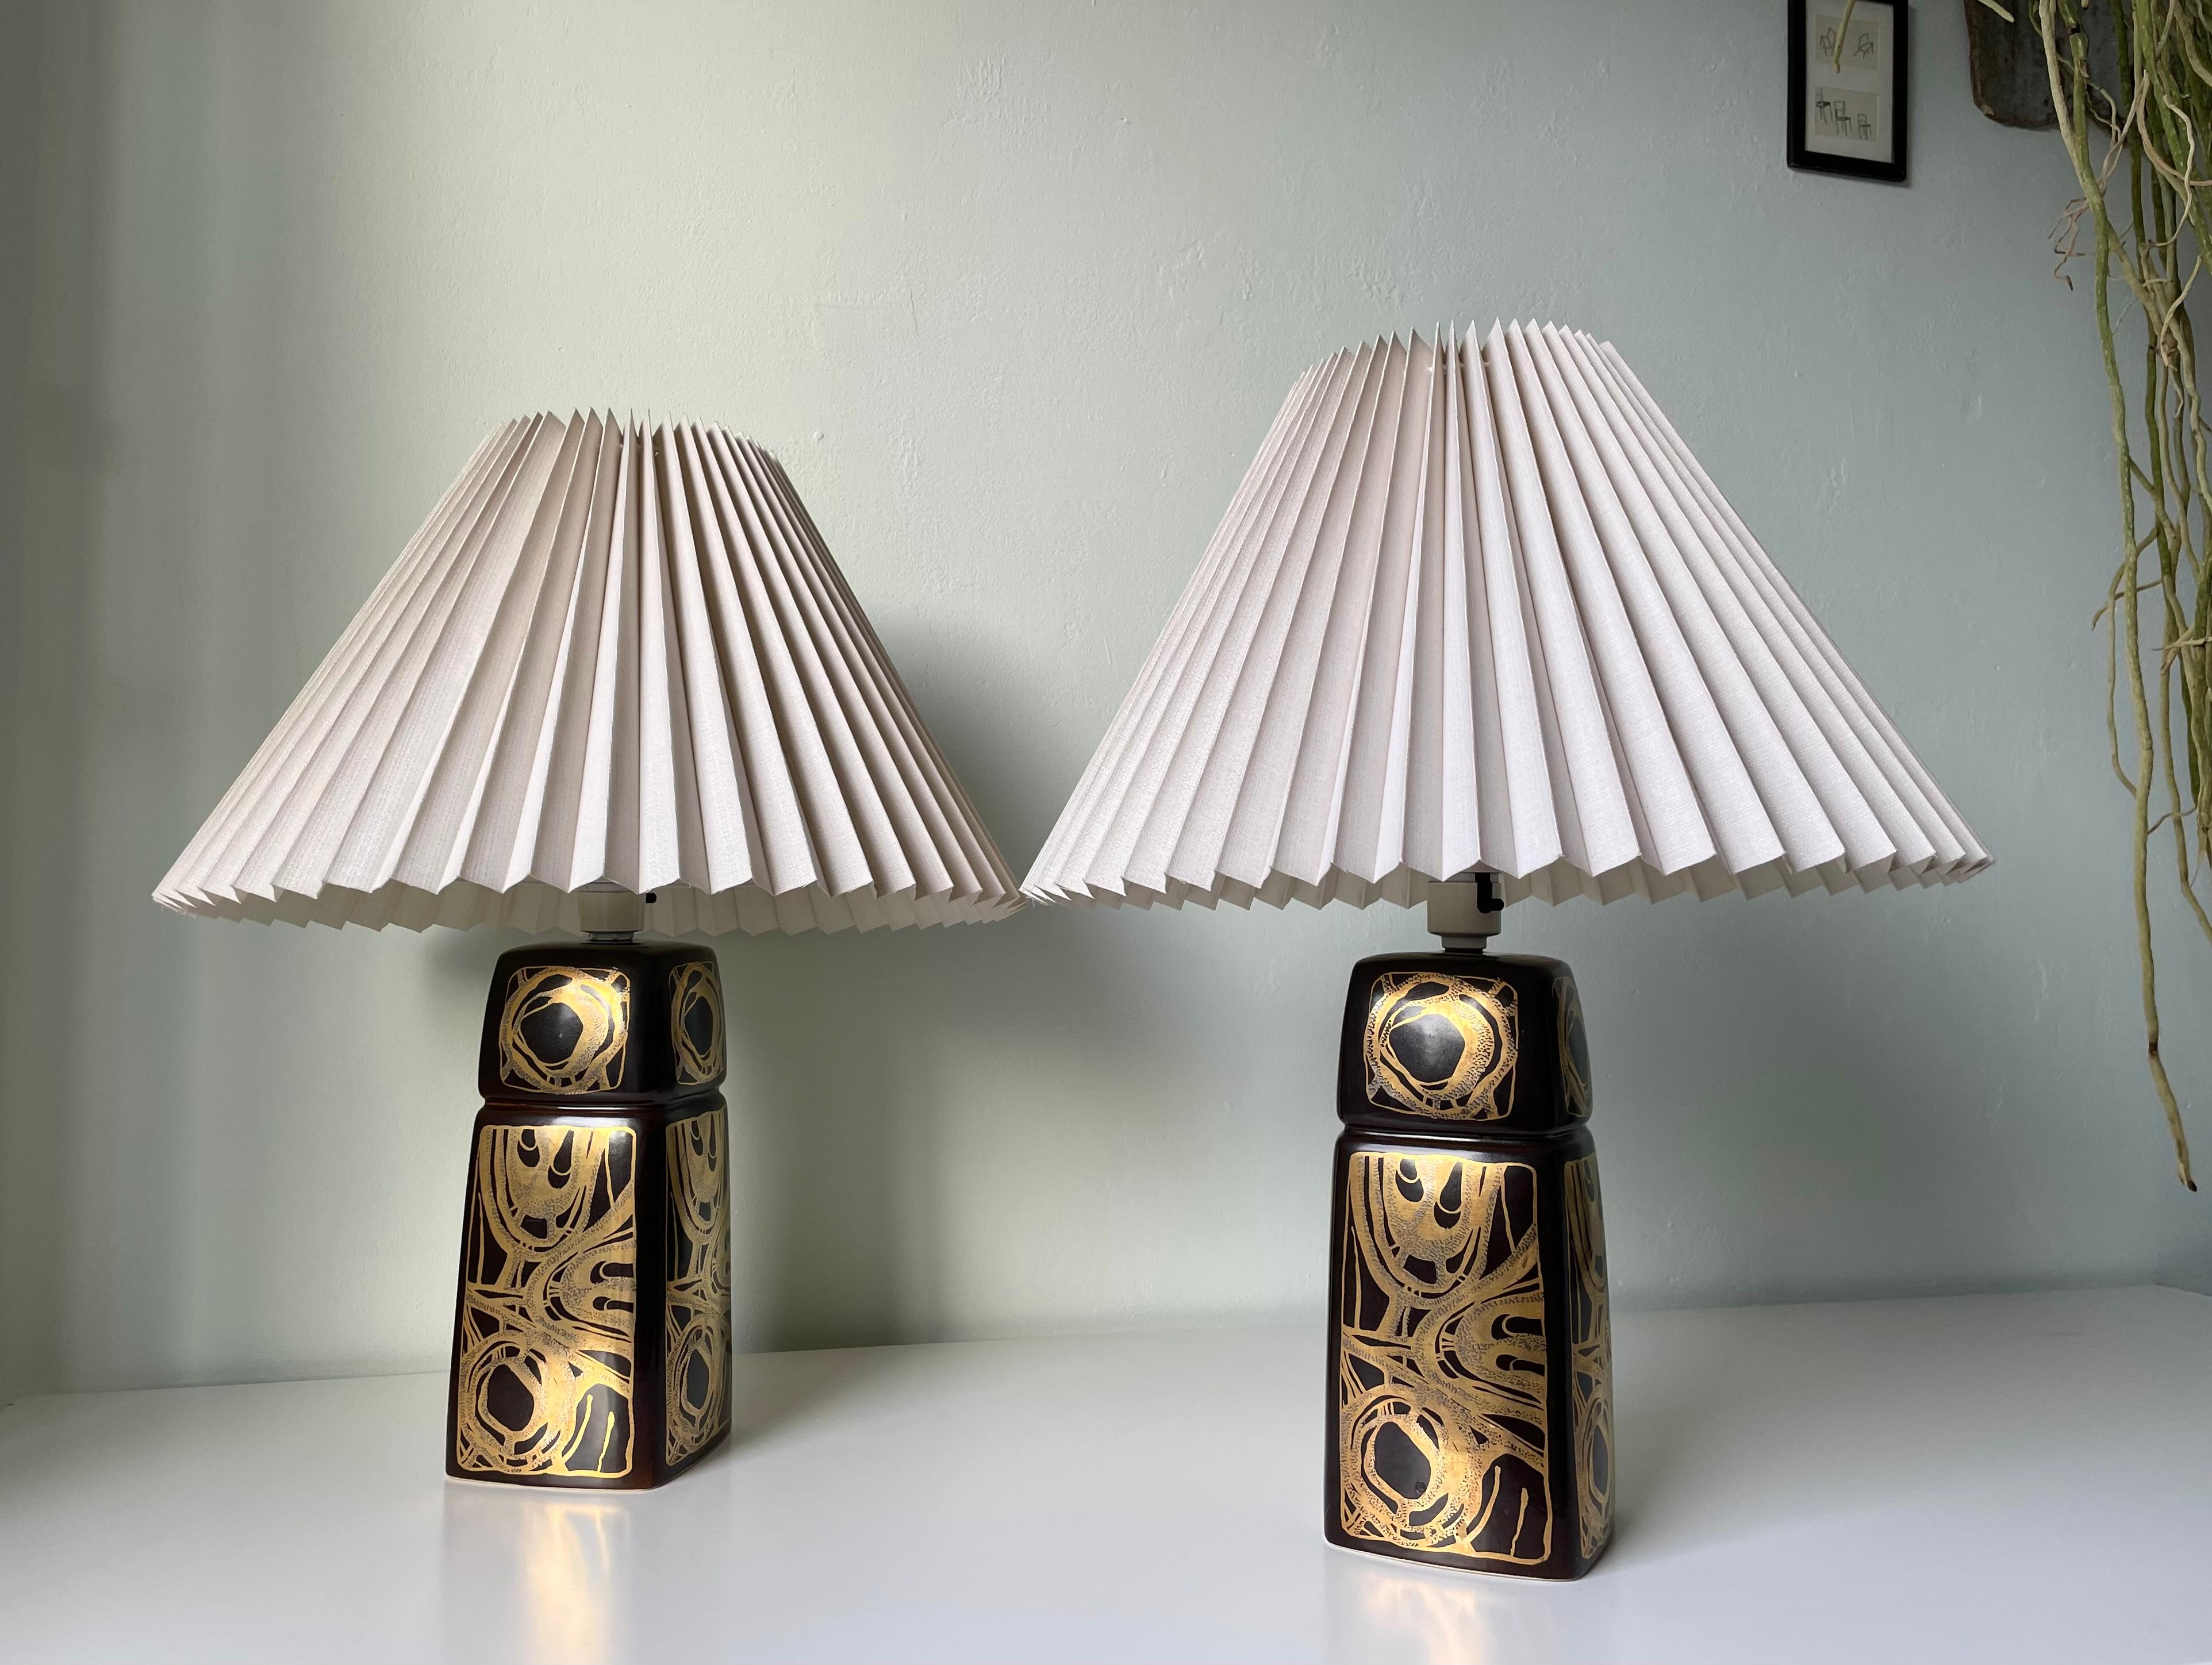 20th Century Hiort Petersen Golden Decor Modernist Table Lamps, 1960s For Sale